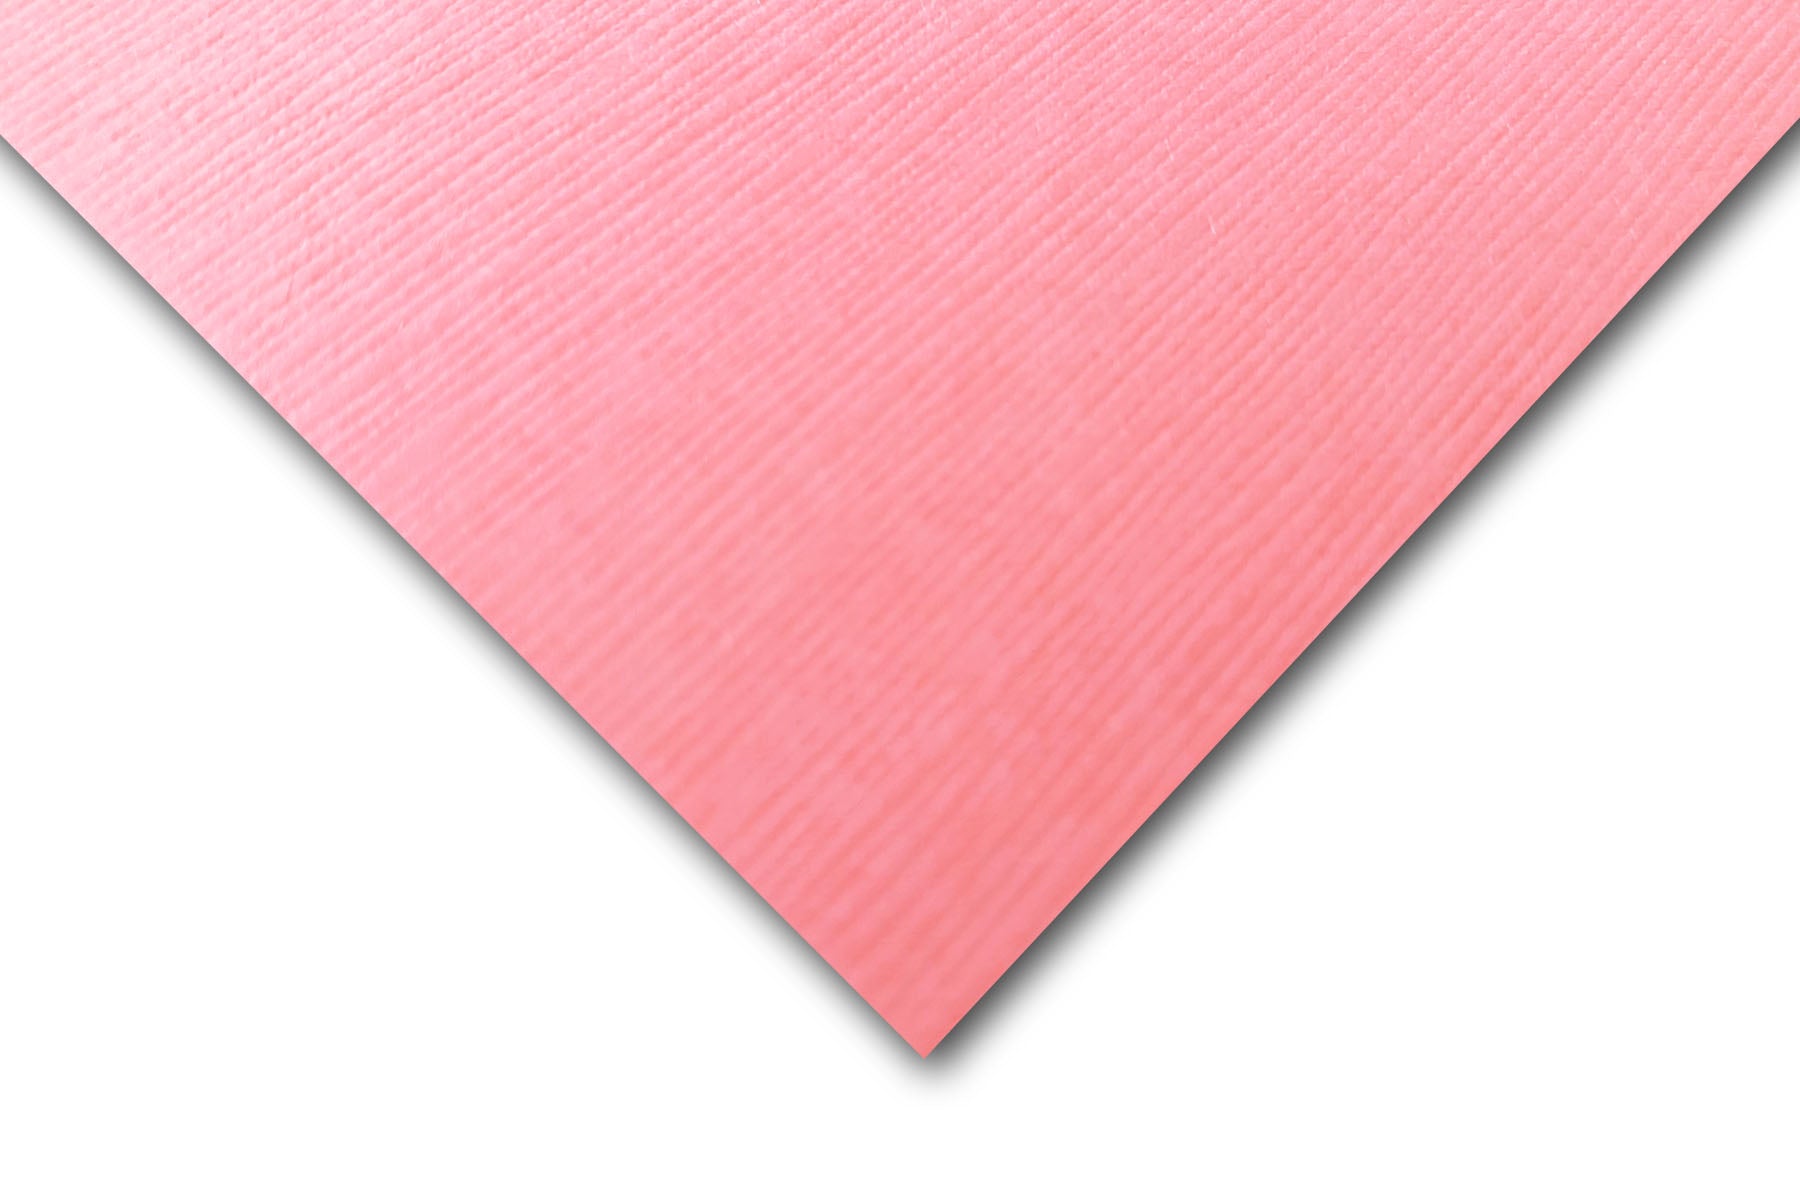 DCS Discount Card Stock: Textured Pink Carnation Card Stock